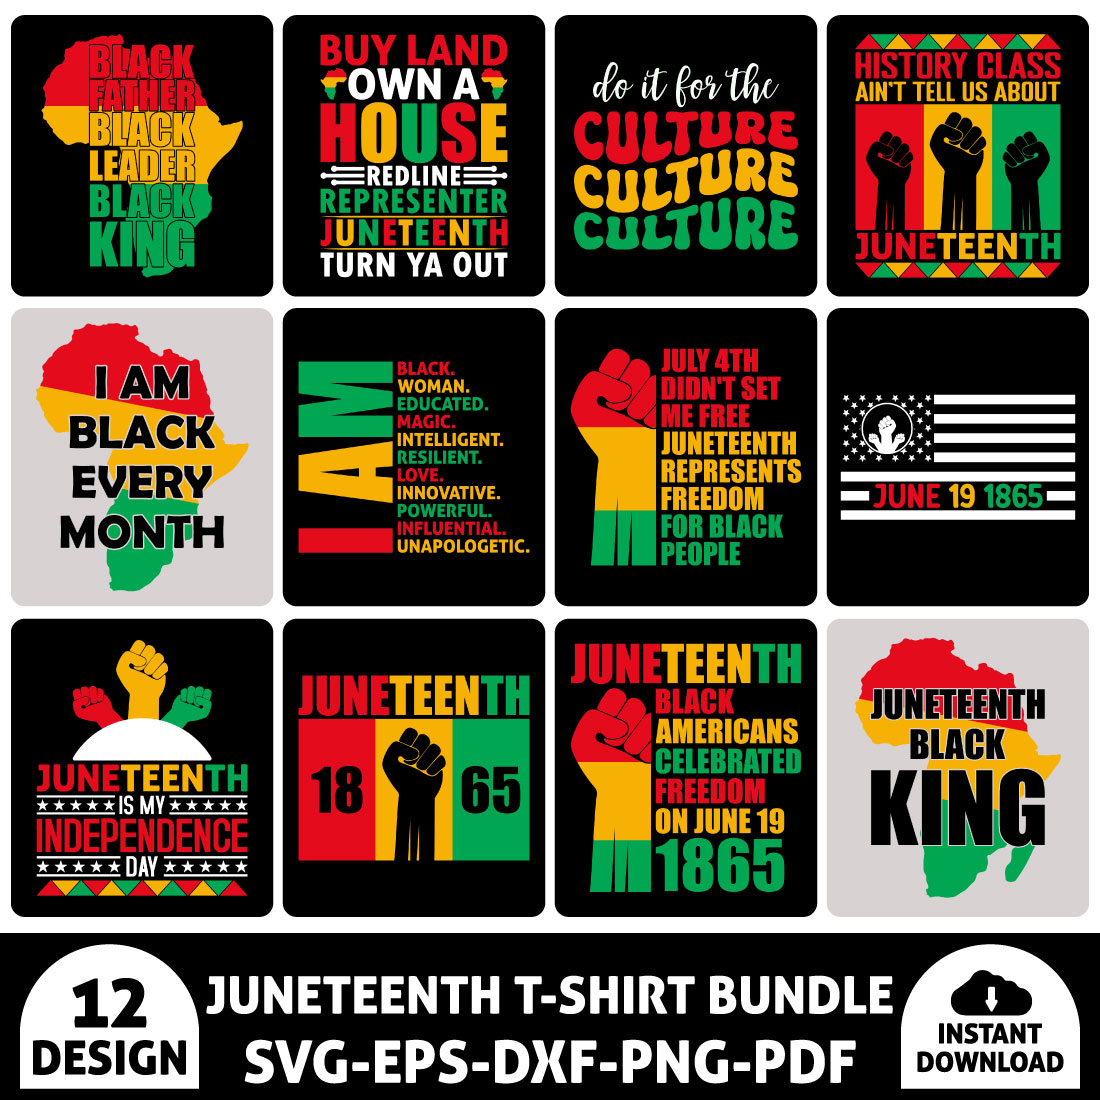 Juneteenth T-Shirt Design Bundle preview image.